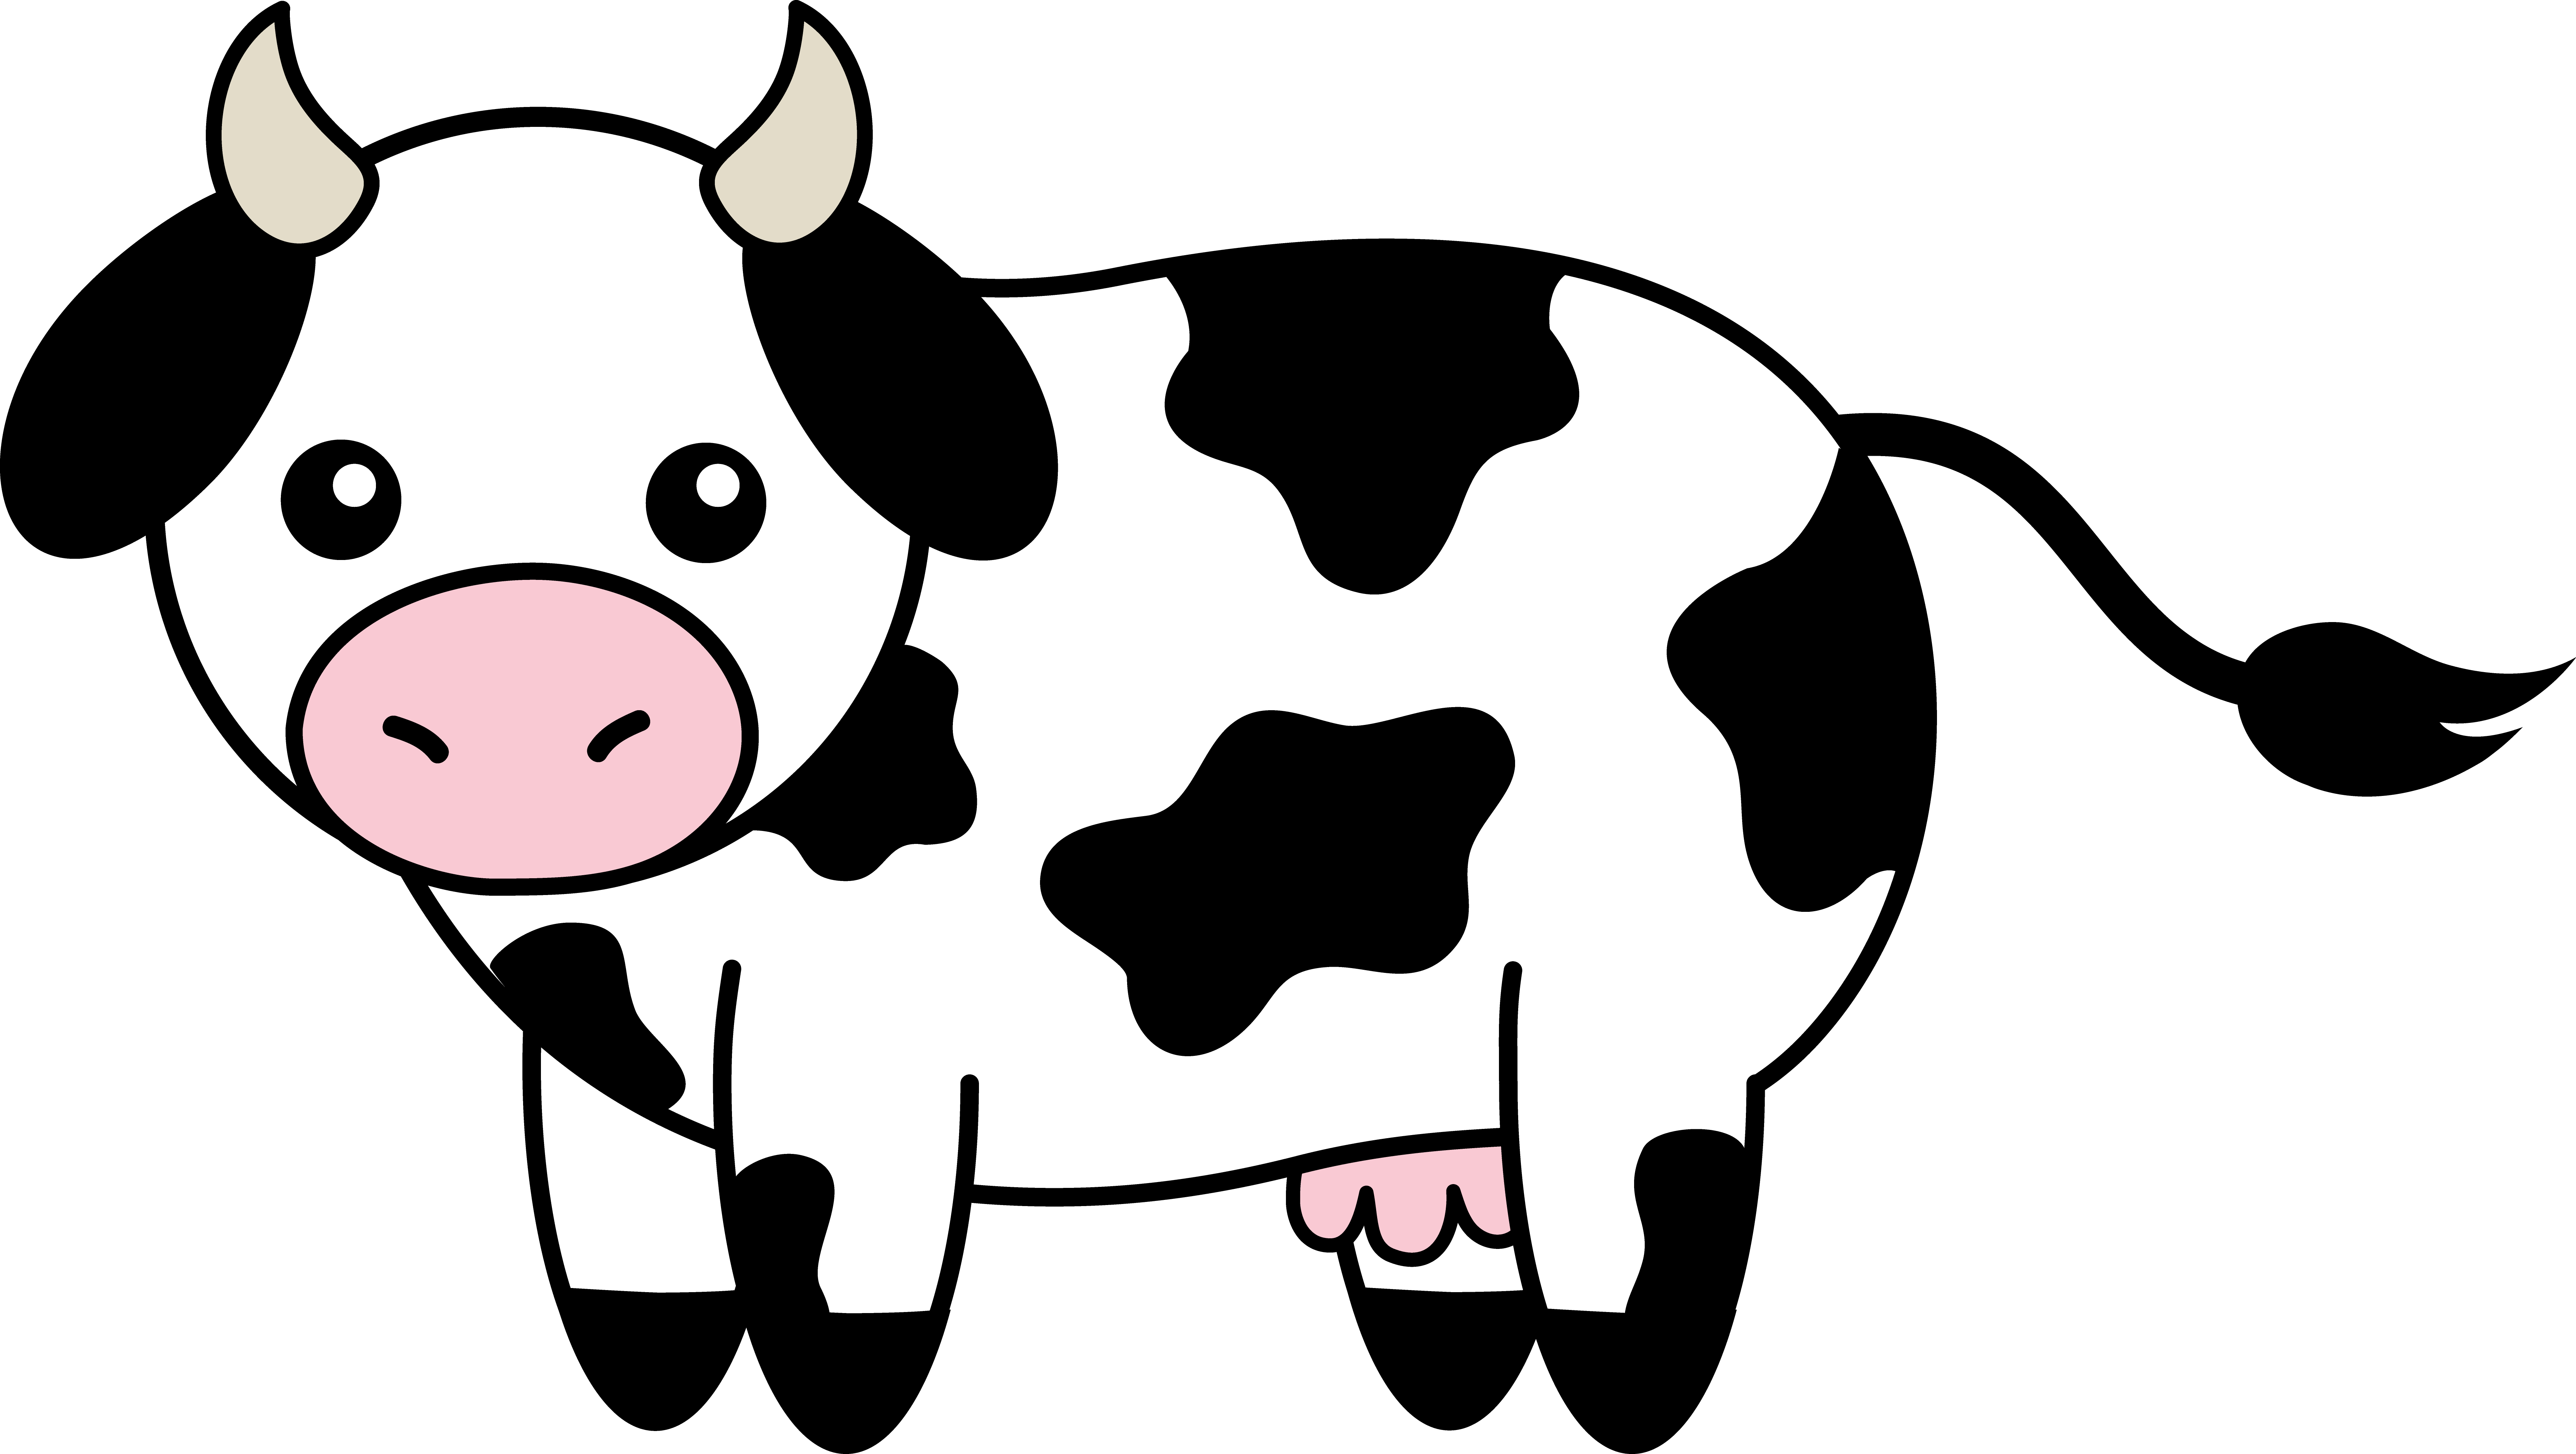 Cow clipart images